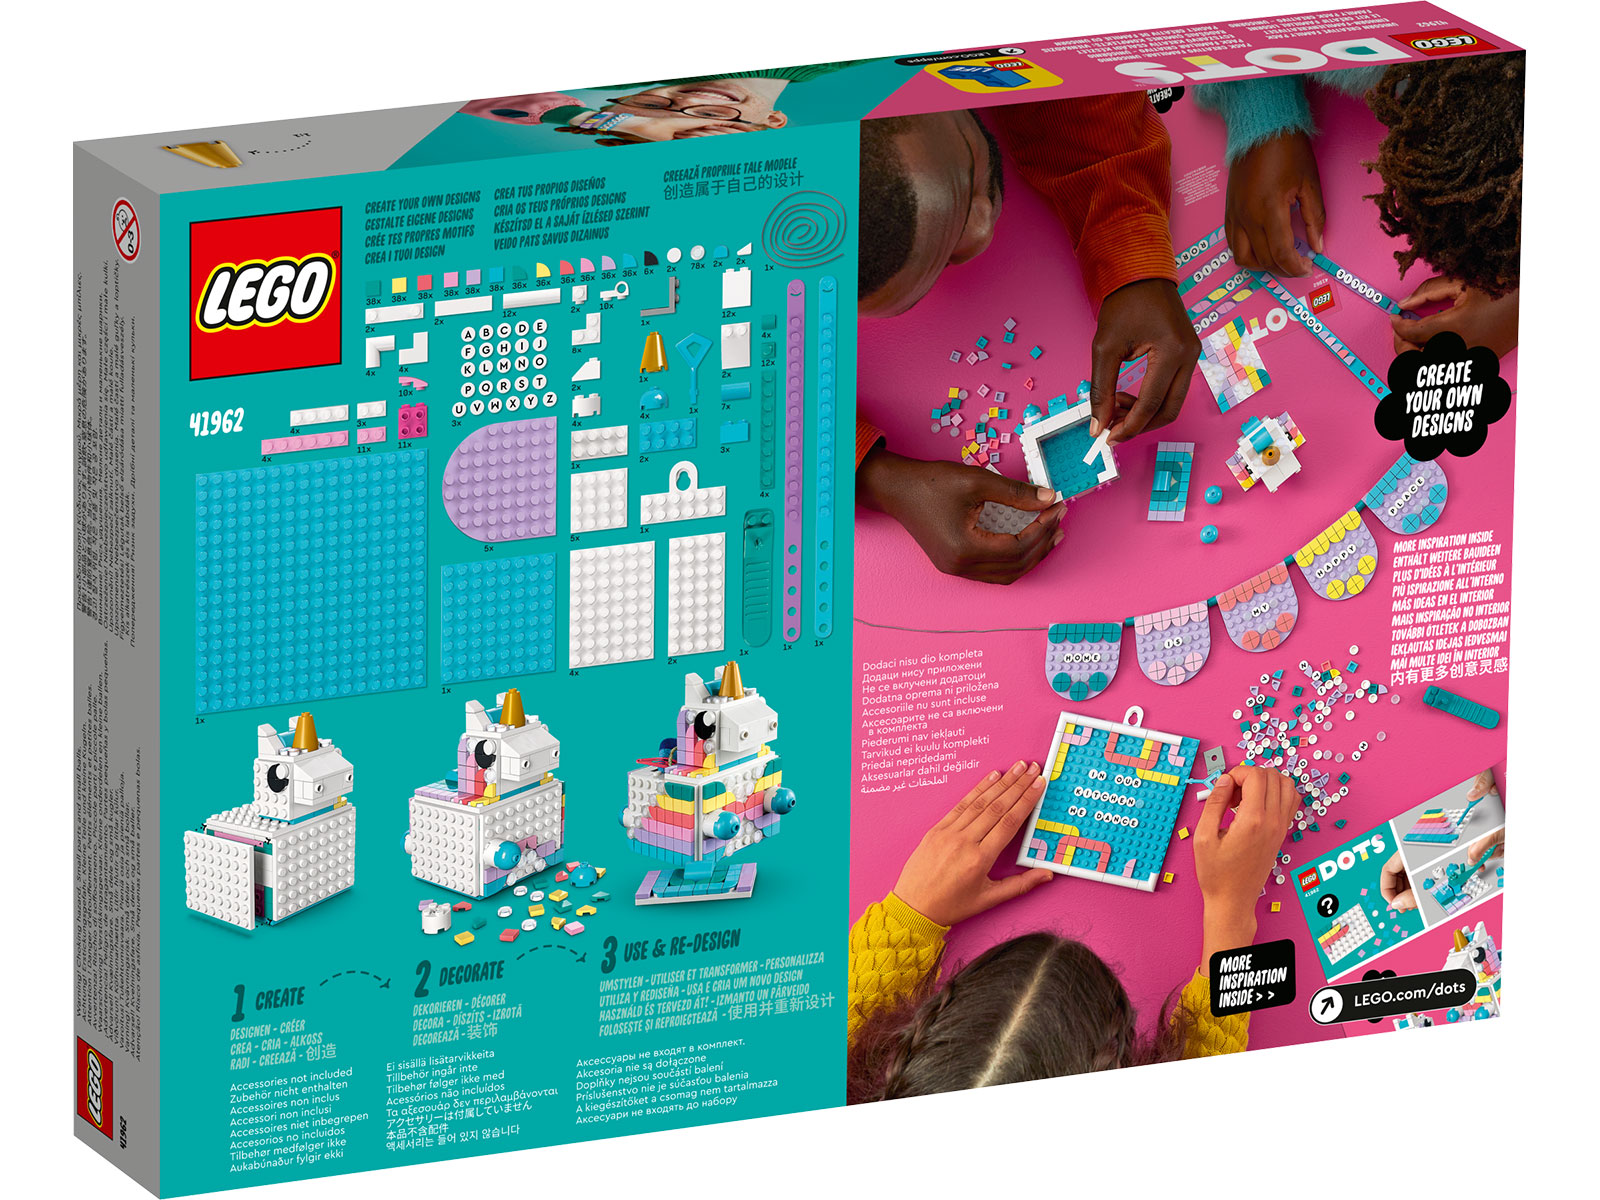 LEGO® DOTS 41962 - Einhorn Familienkreativset